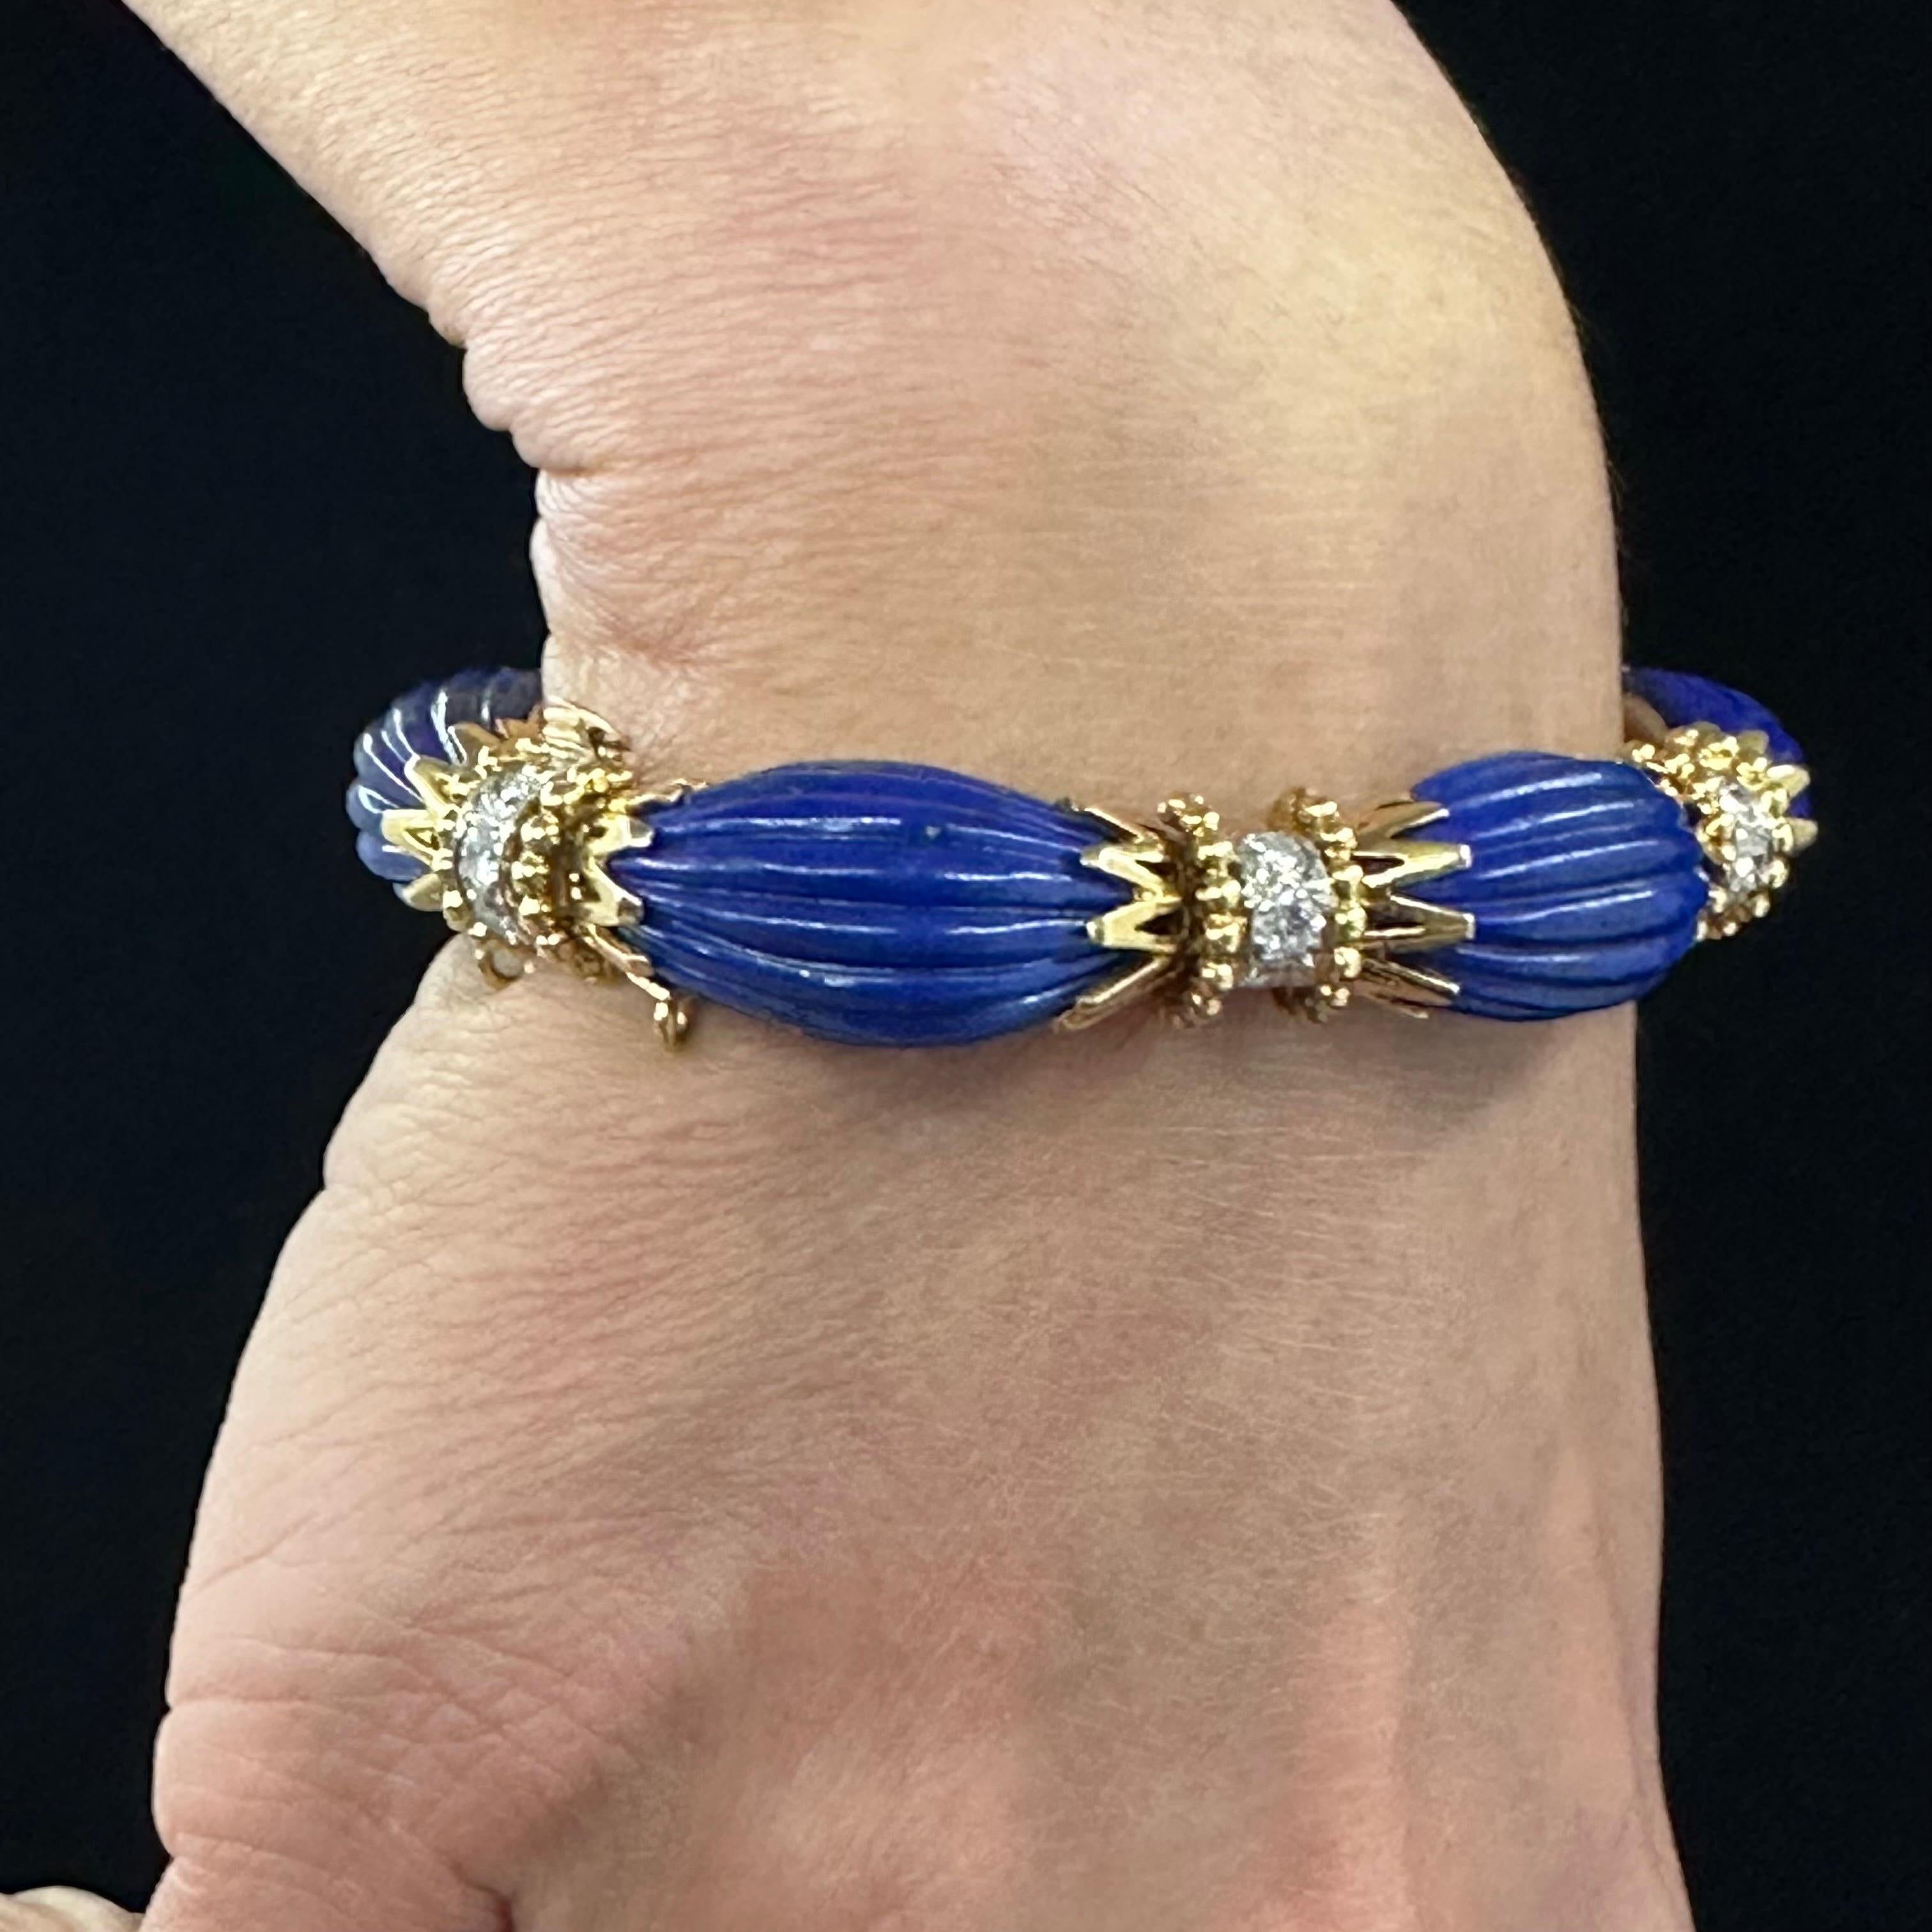 Brilliant Cut 1970 Van Cleef & Arpels Lapis Lazuli Diamond Bracelet 18k Yellow Gold 